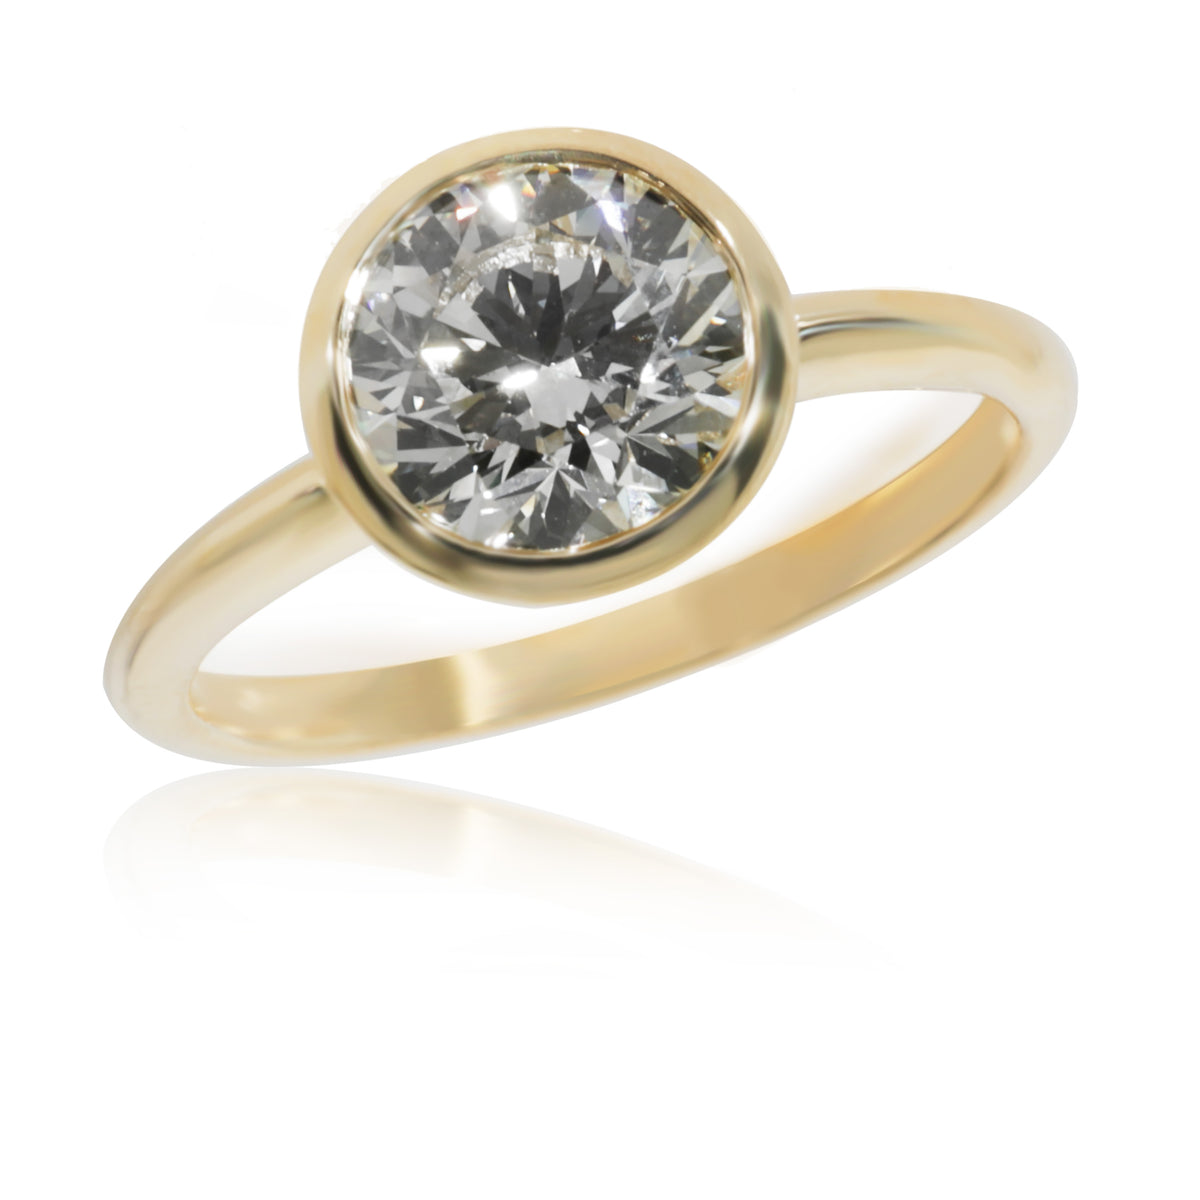 Bezel Set Solitaire Diamond Engagement Ring in 14K Yellow Gold IGI J/VS1 1.75 Ct